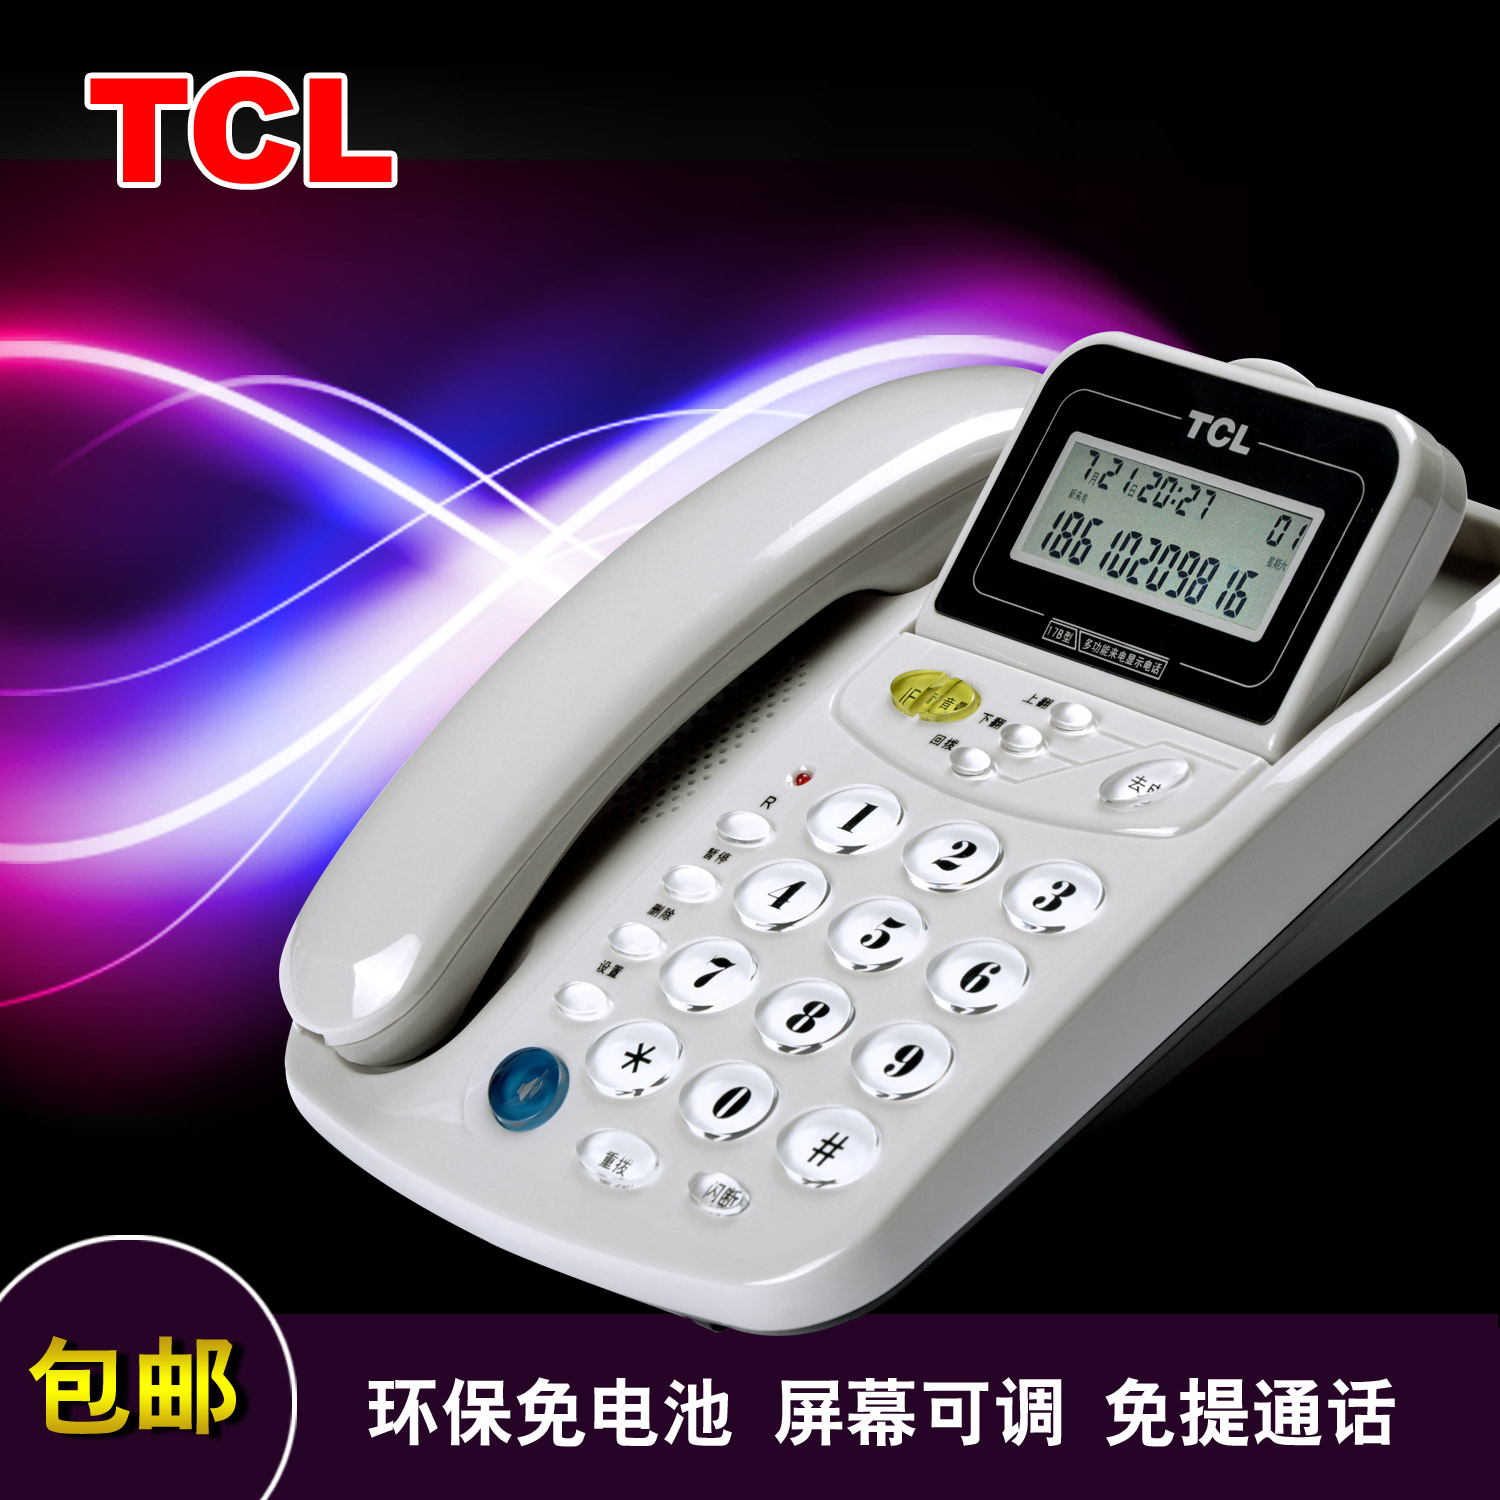 TCL 电话机 17B 办公电话 座机 免电池 免提通话 家用 固话 座机折扣优惠信息